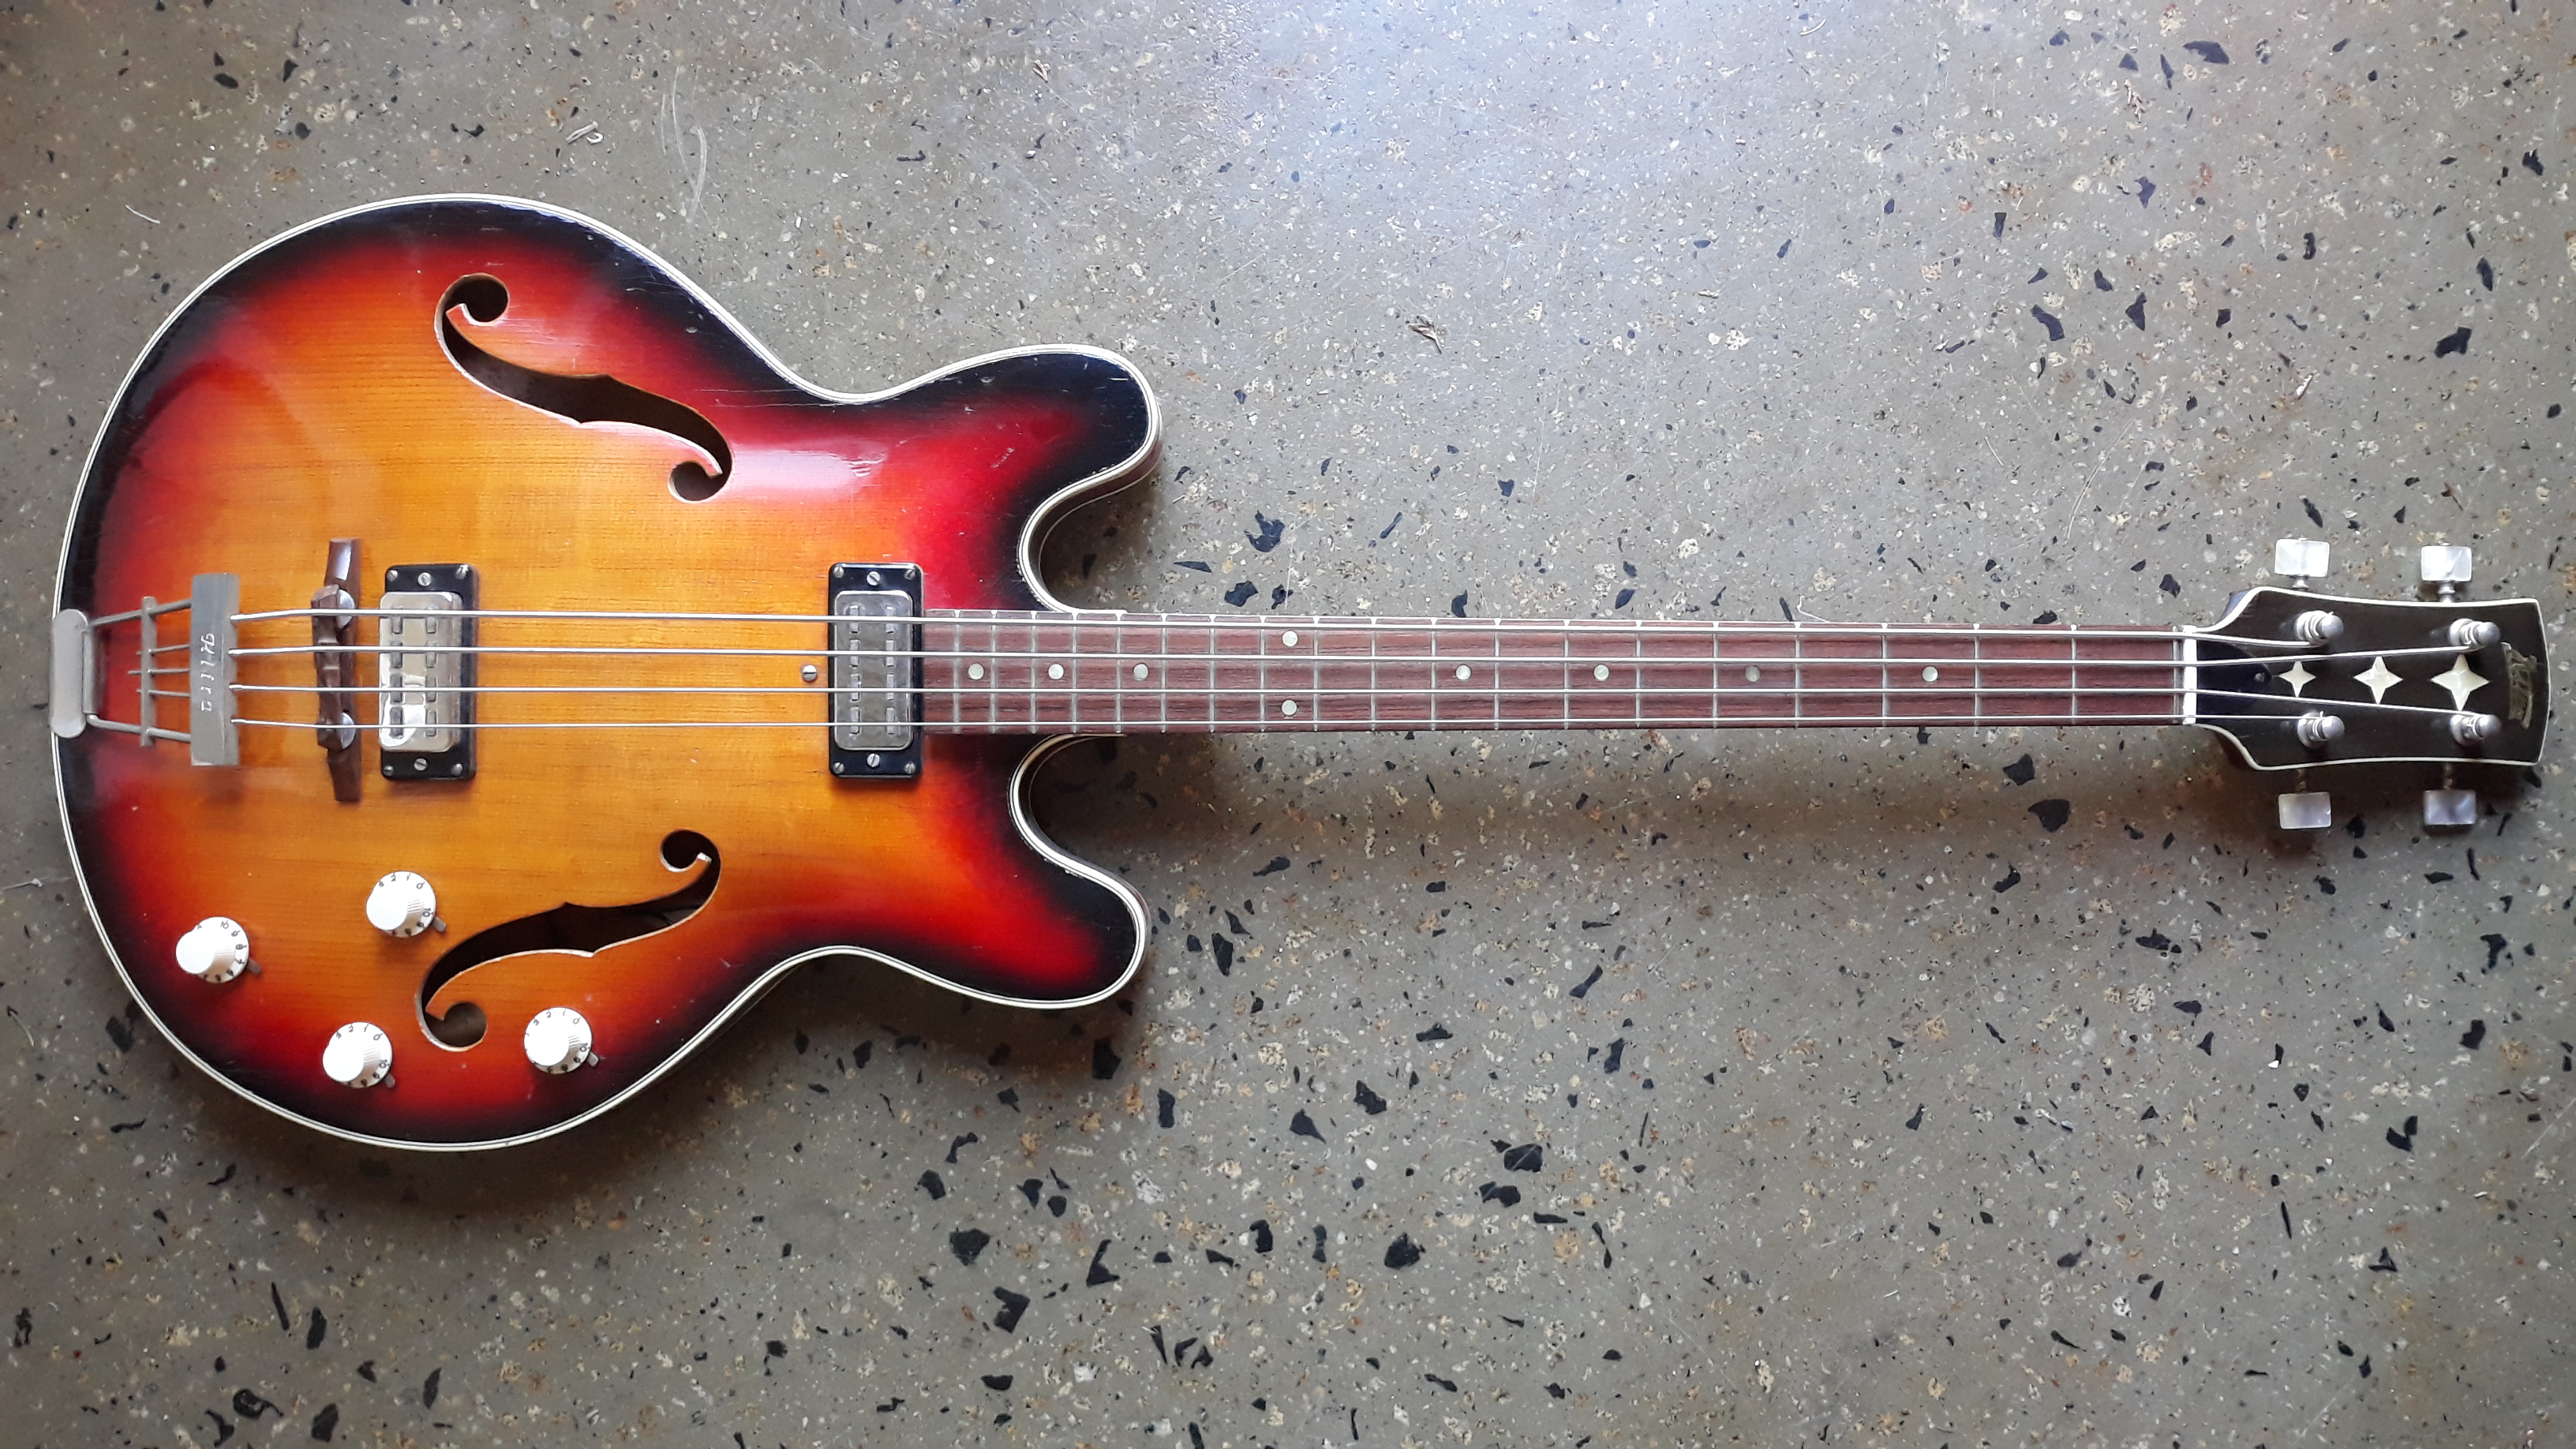 1964 Klira thinline bass